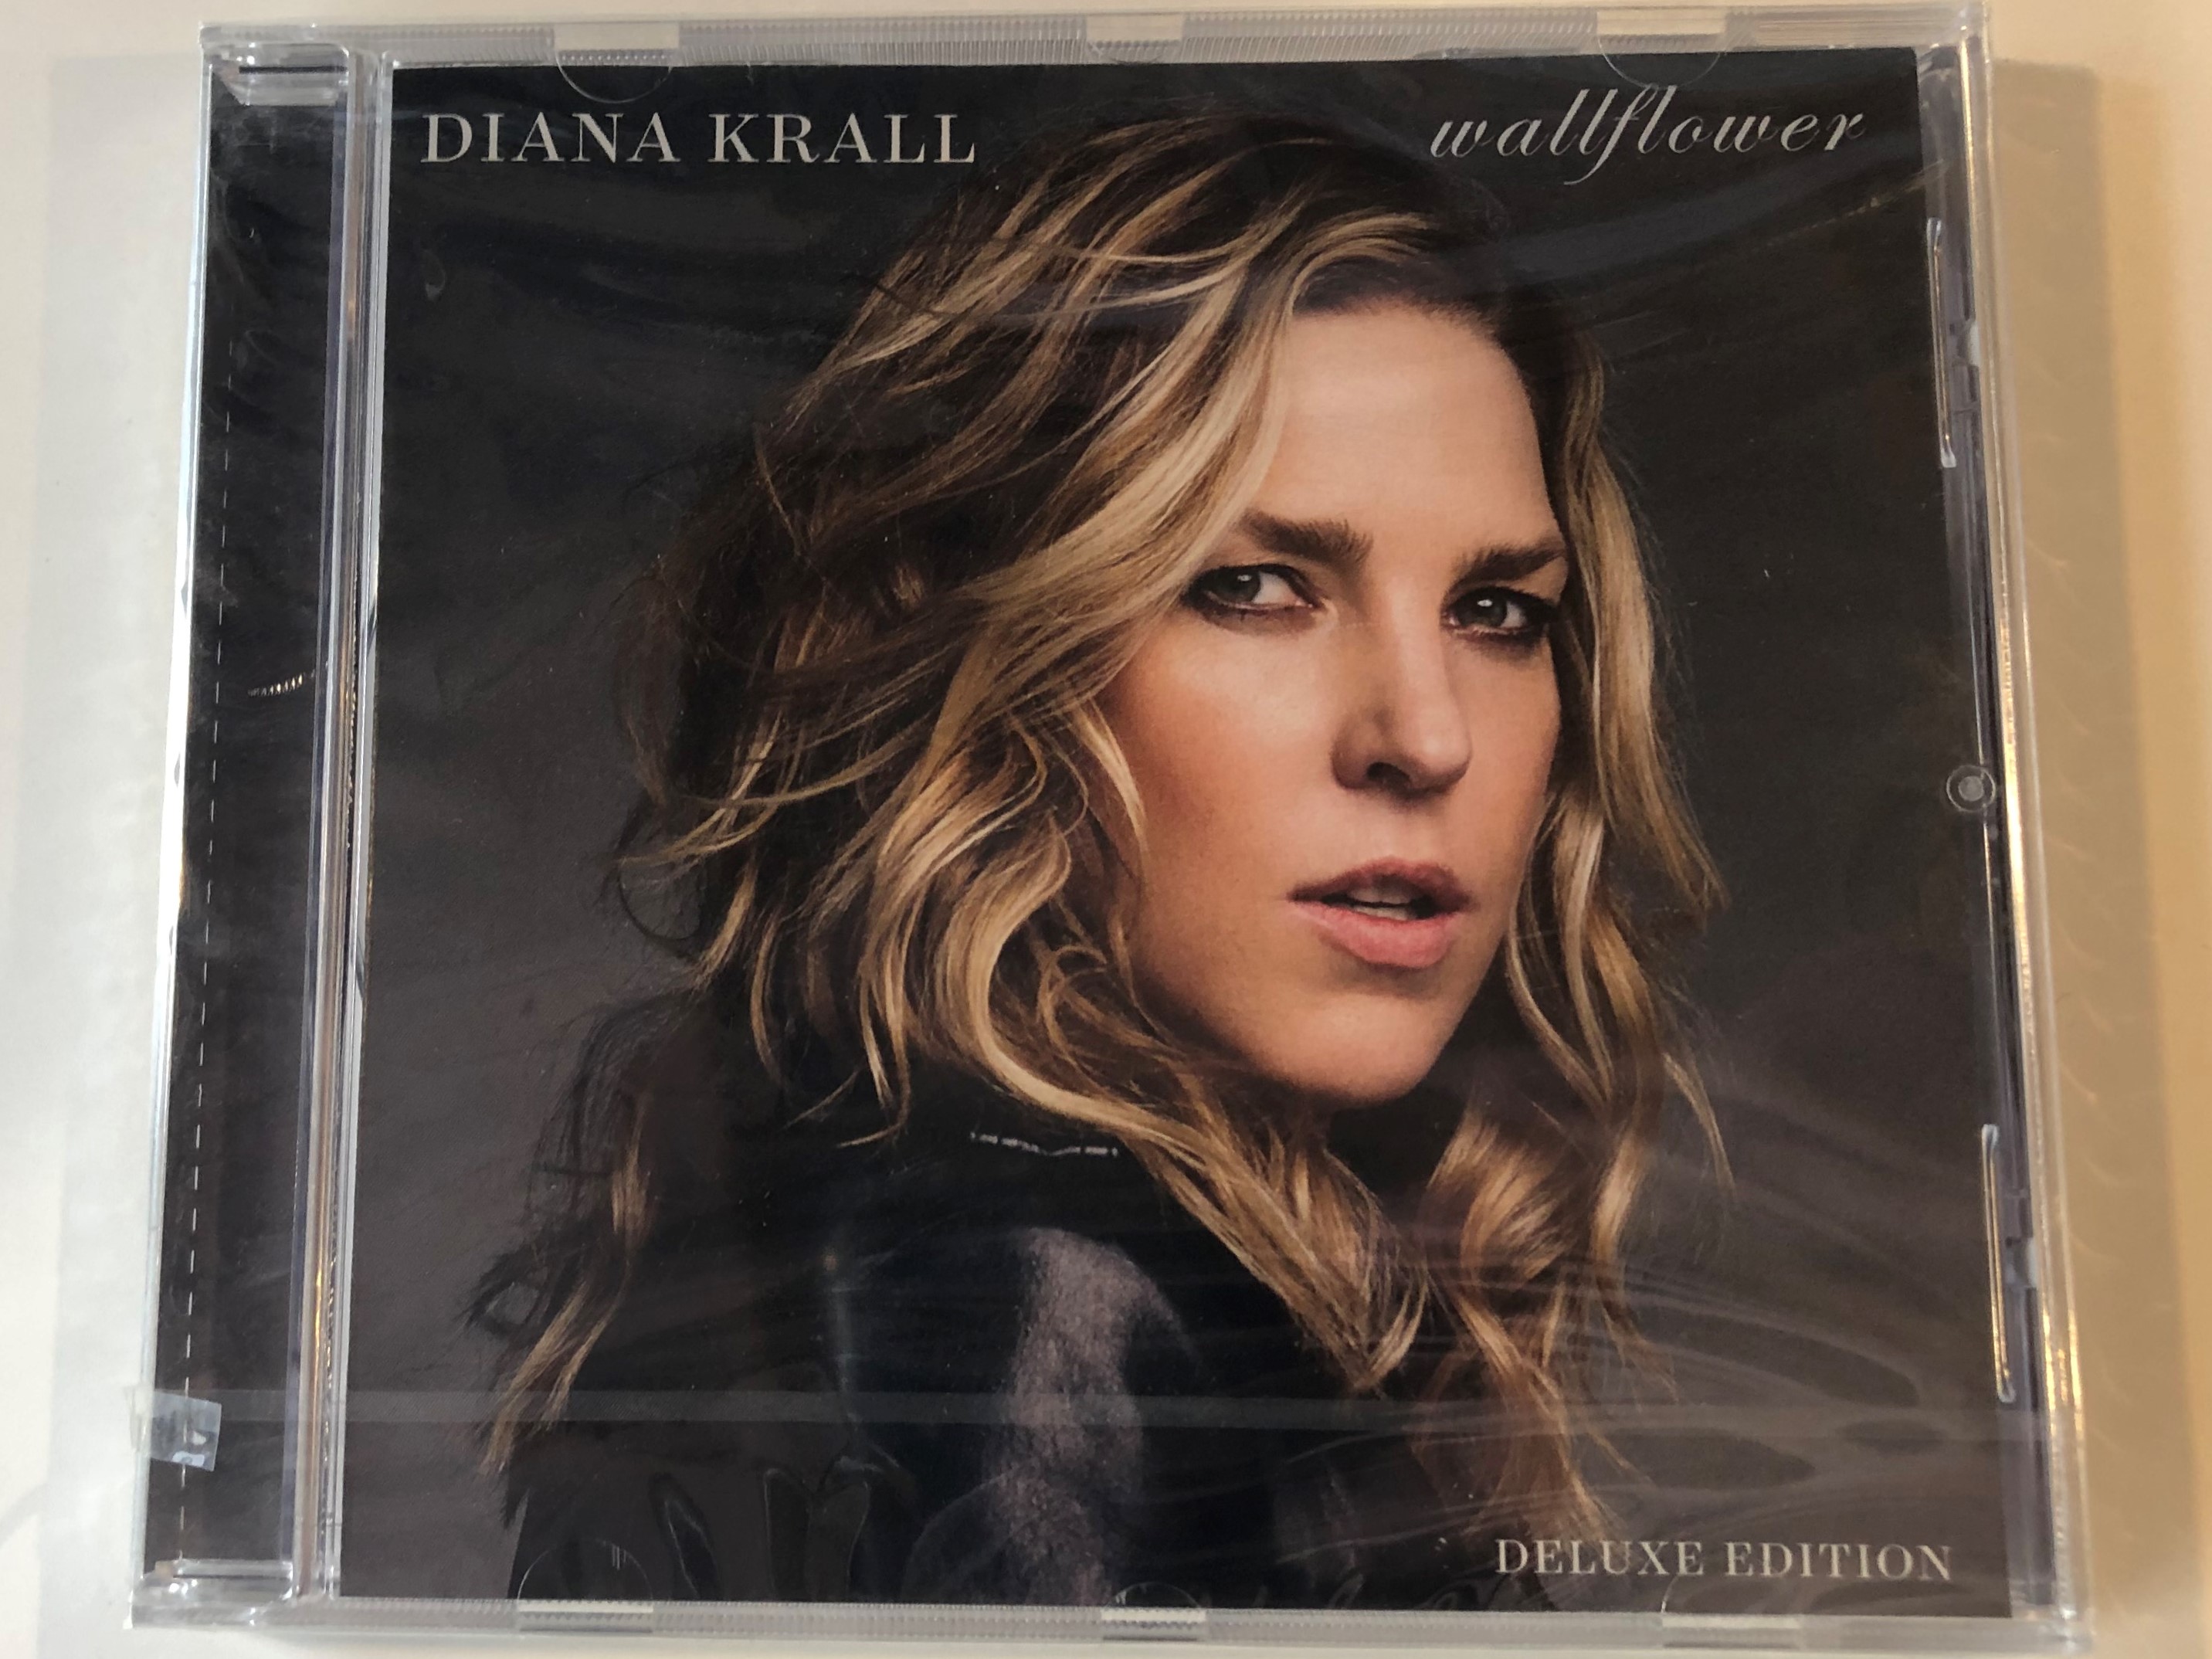 diana-krall-wallflower-deluxe-edition-verve-records-audio-cd-2015-602547018618-1-.jpg